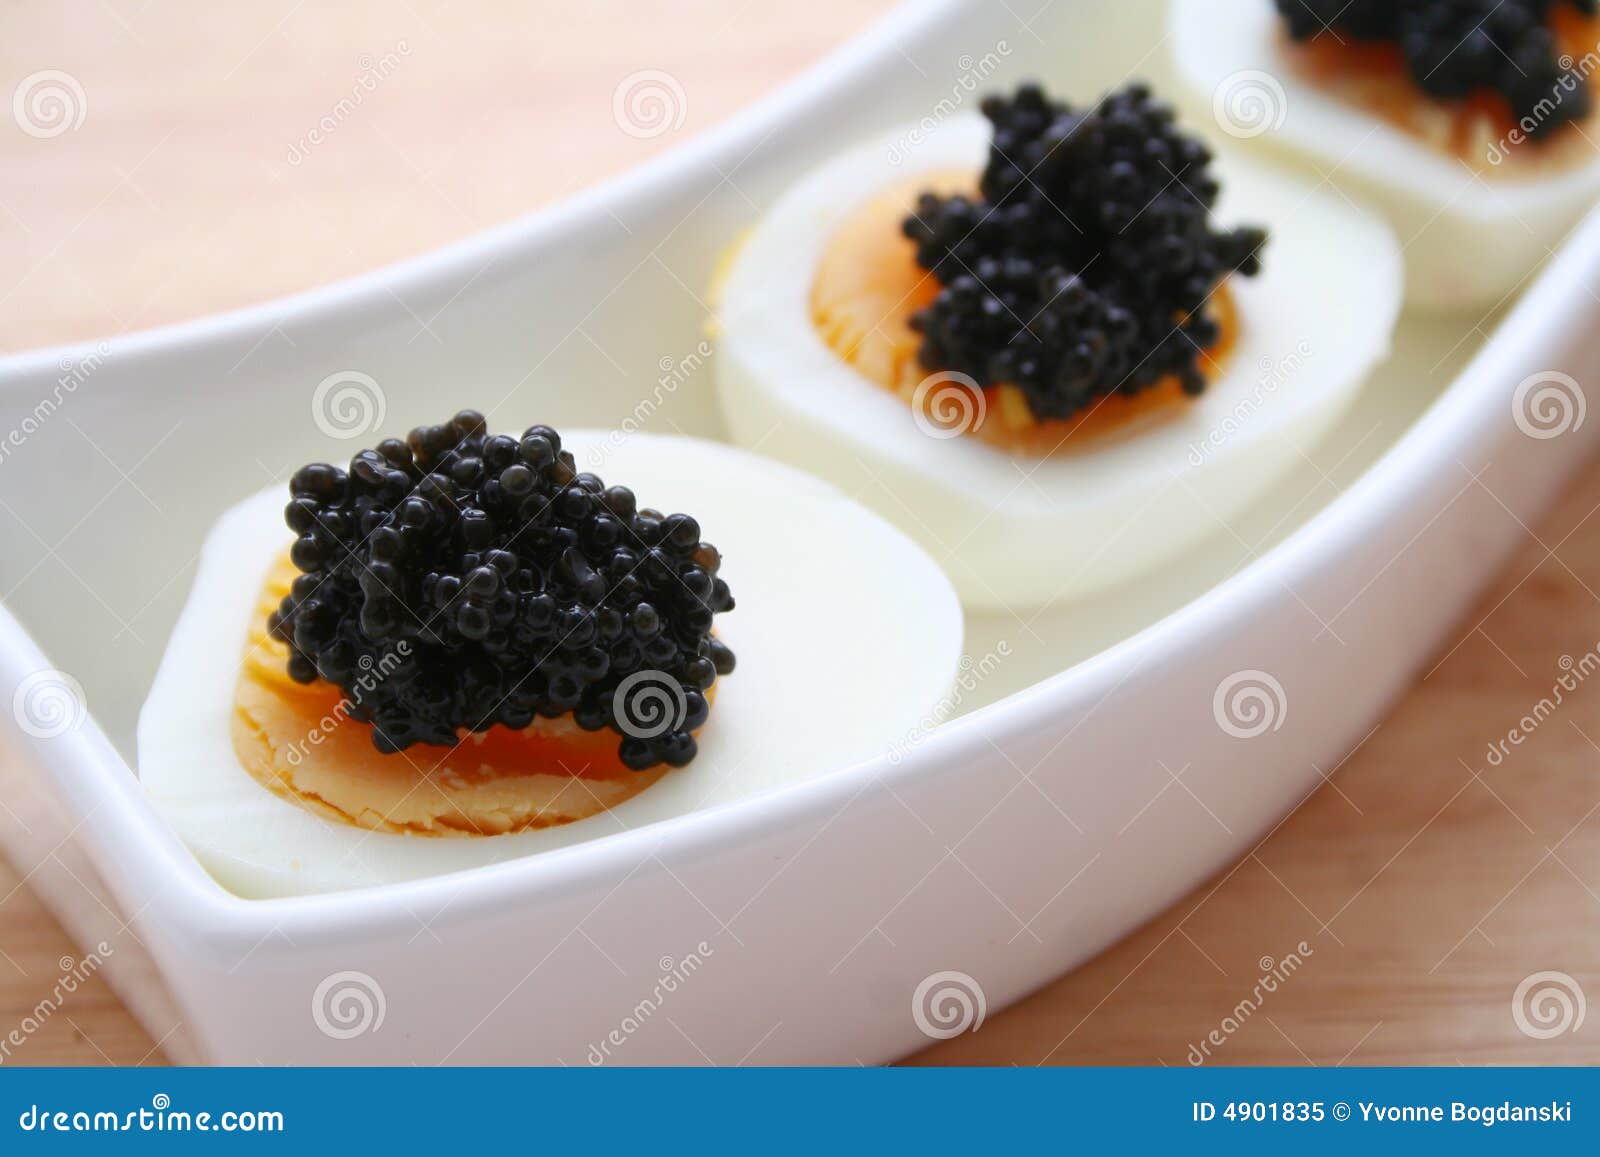 eggs with caviar